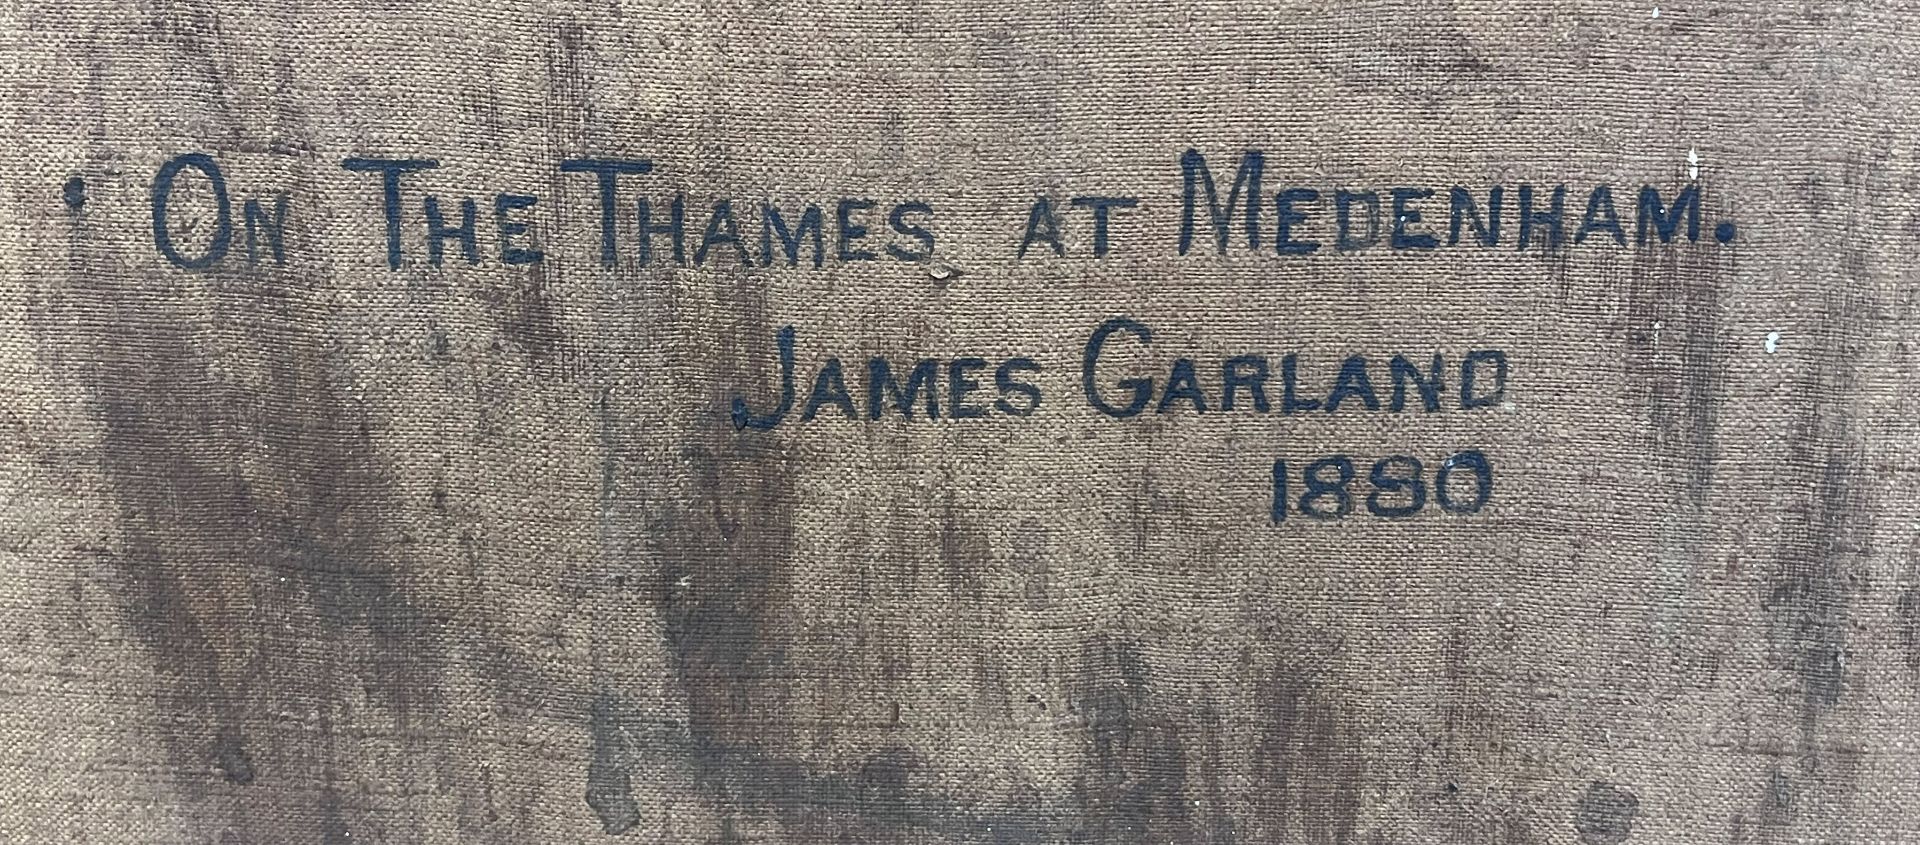 James GARLAND (1846 - 1944). "On the Thames at Medenham". Dated 1880. - Image 14 of 16